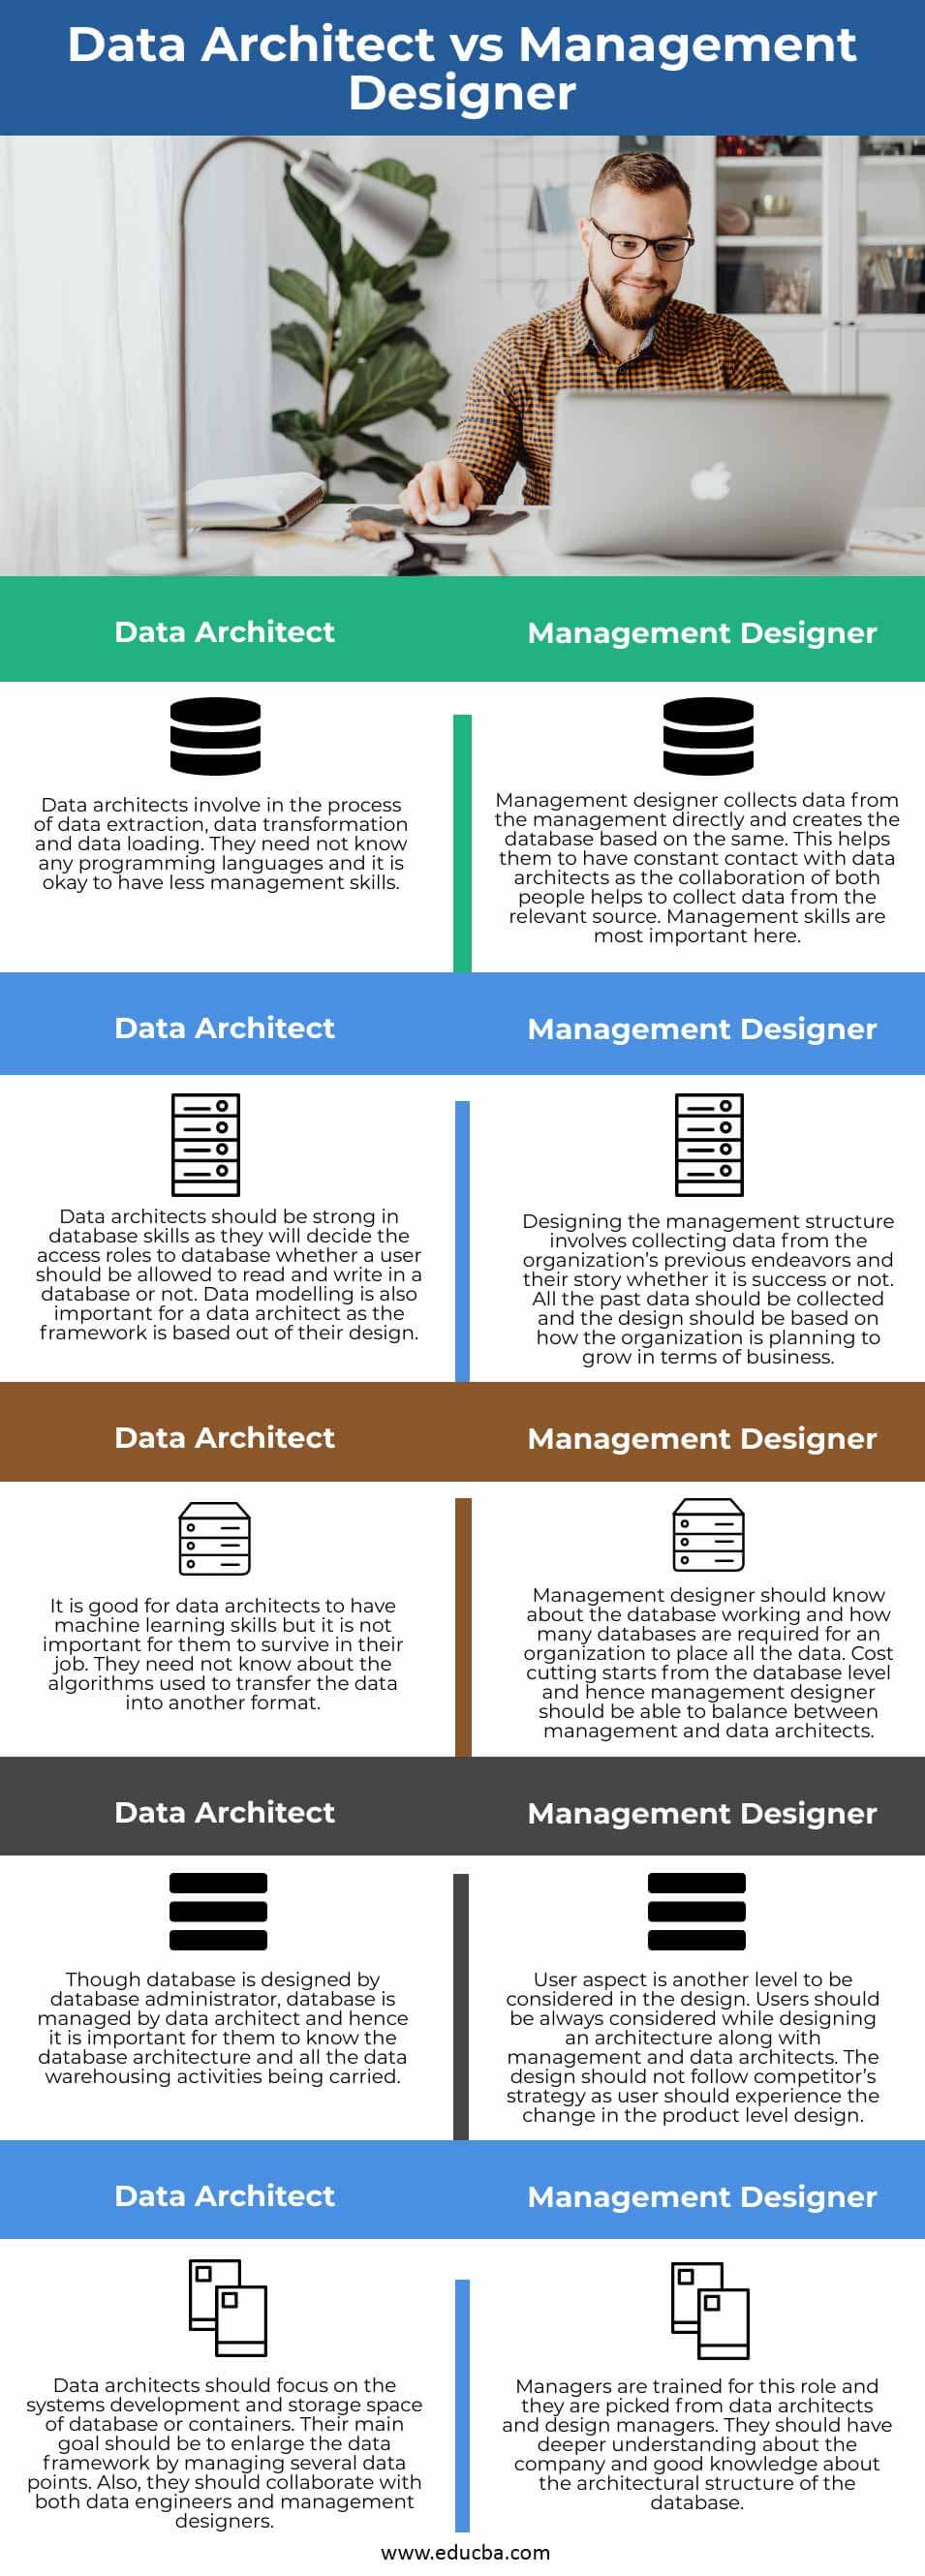 Data-Architect-and-Management-Designer-info